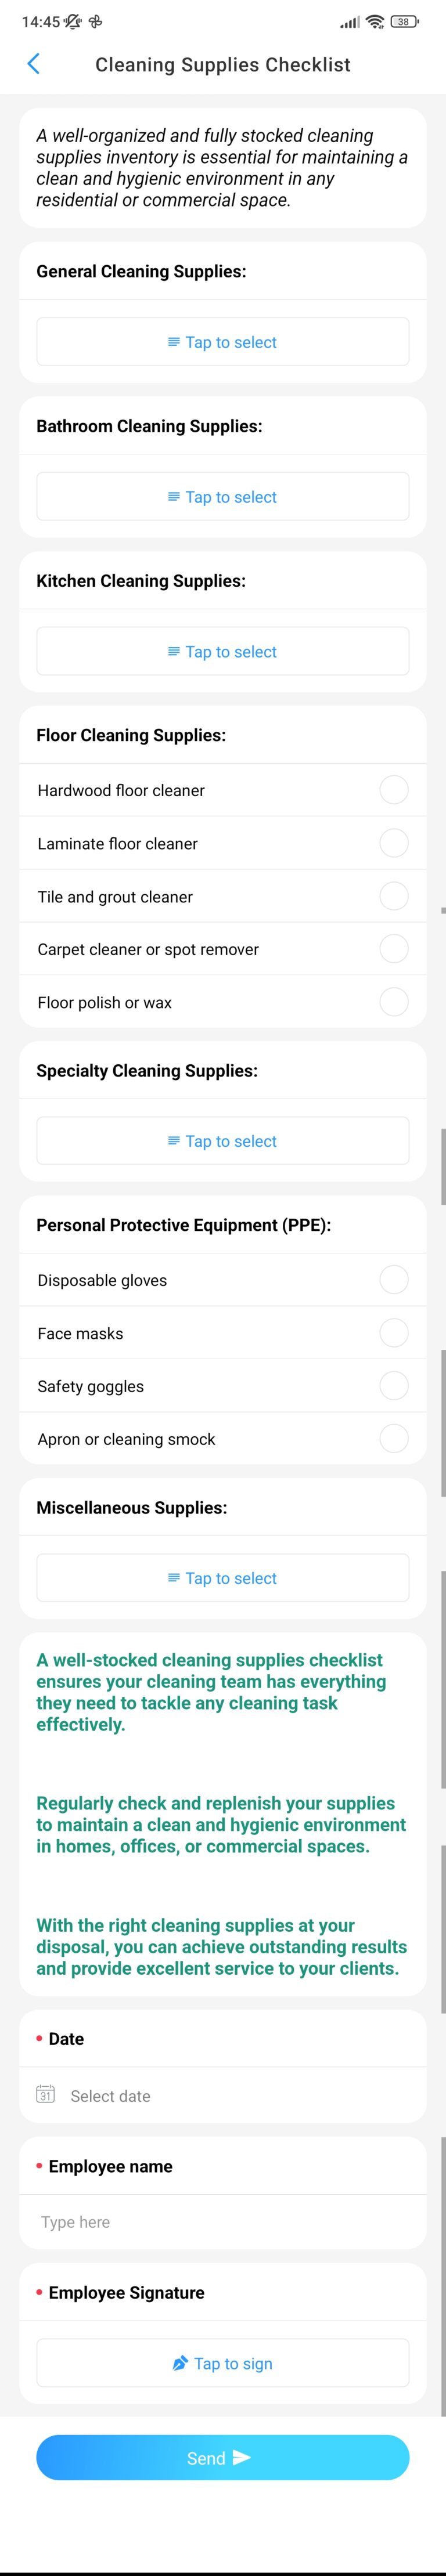 Cleaning Supplies Checklist screenshot